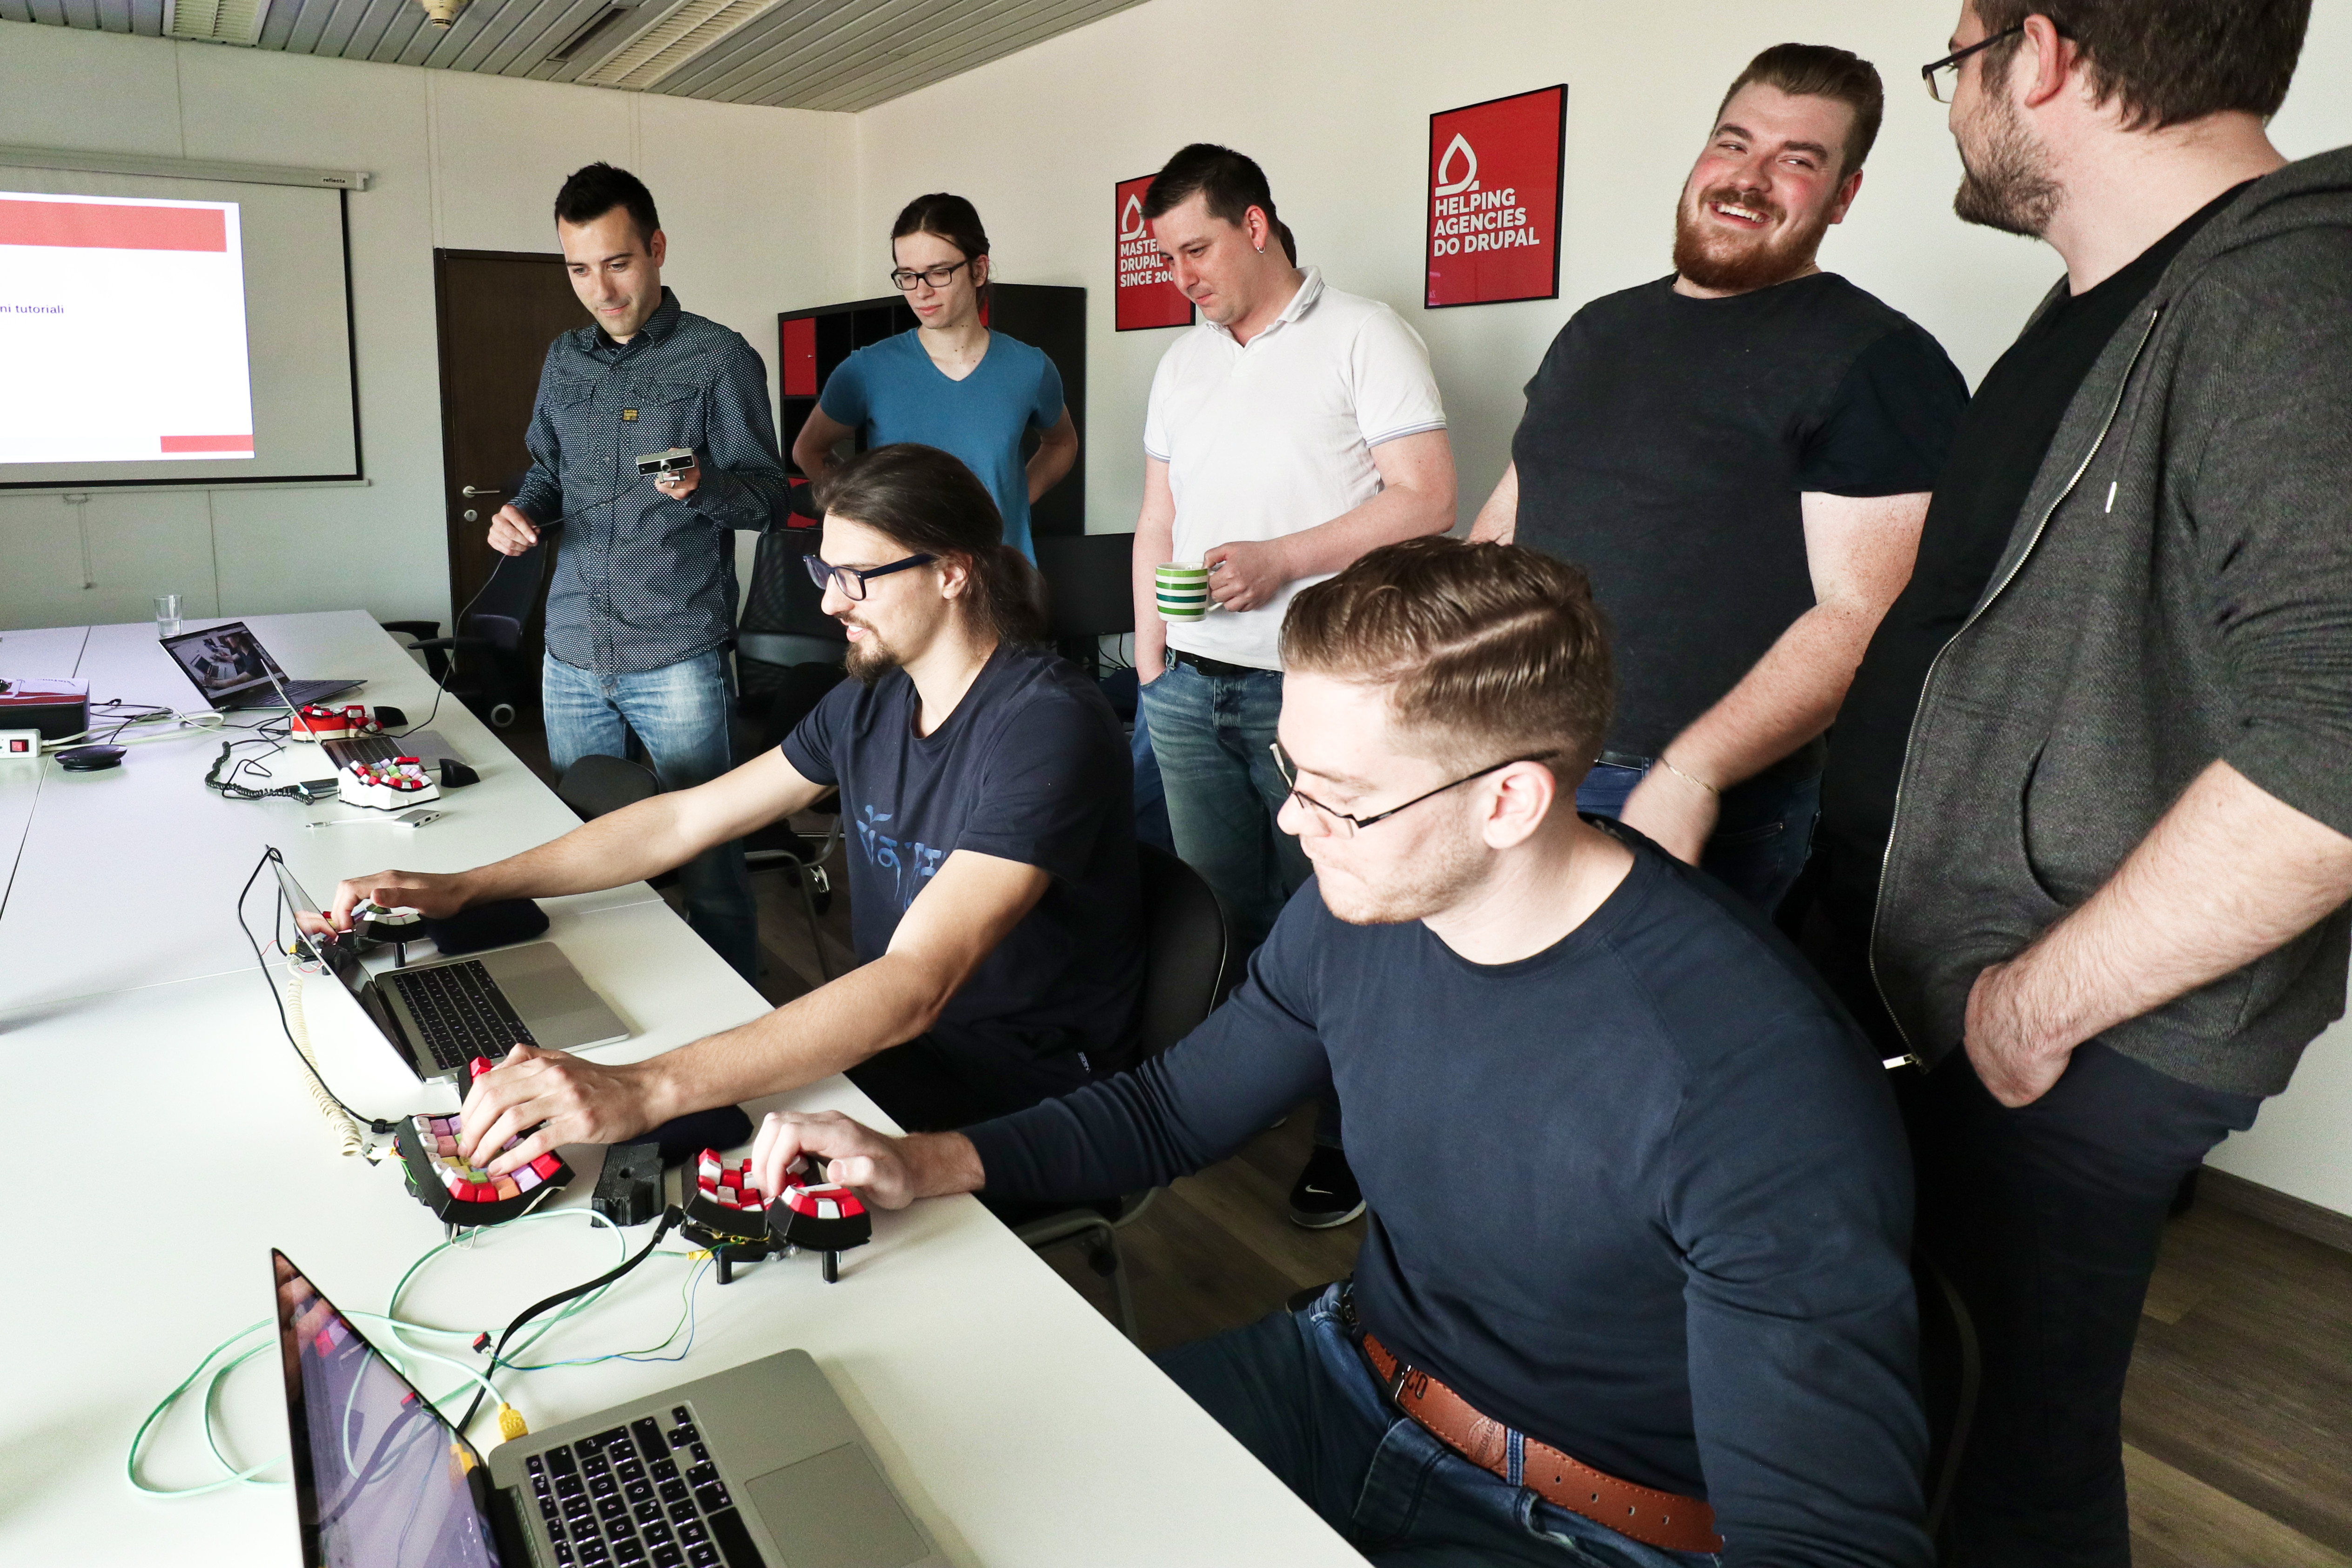 Agiledrop team using ergonomic keyboards